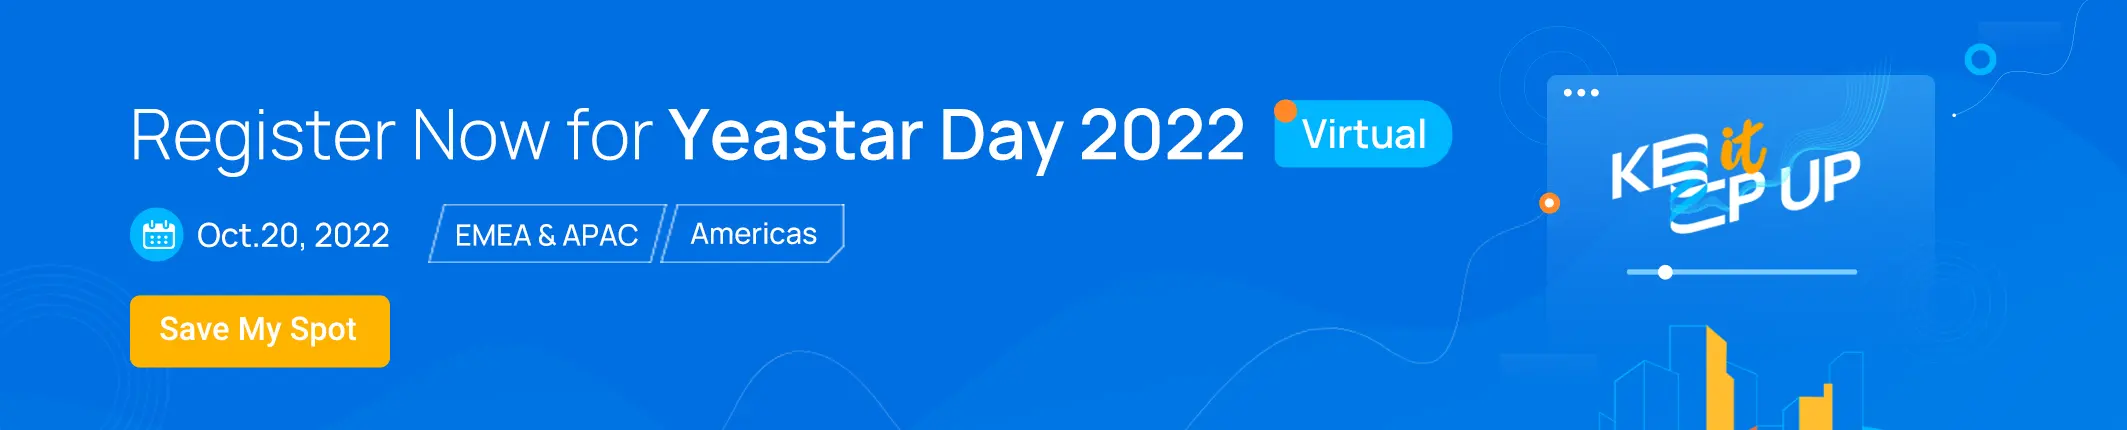 Yeastar Day 2022 Virtual Register Now